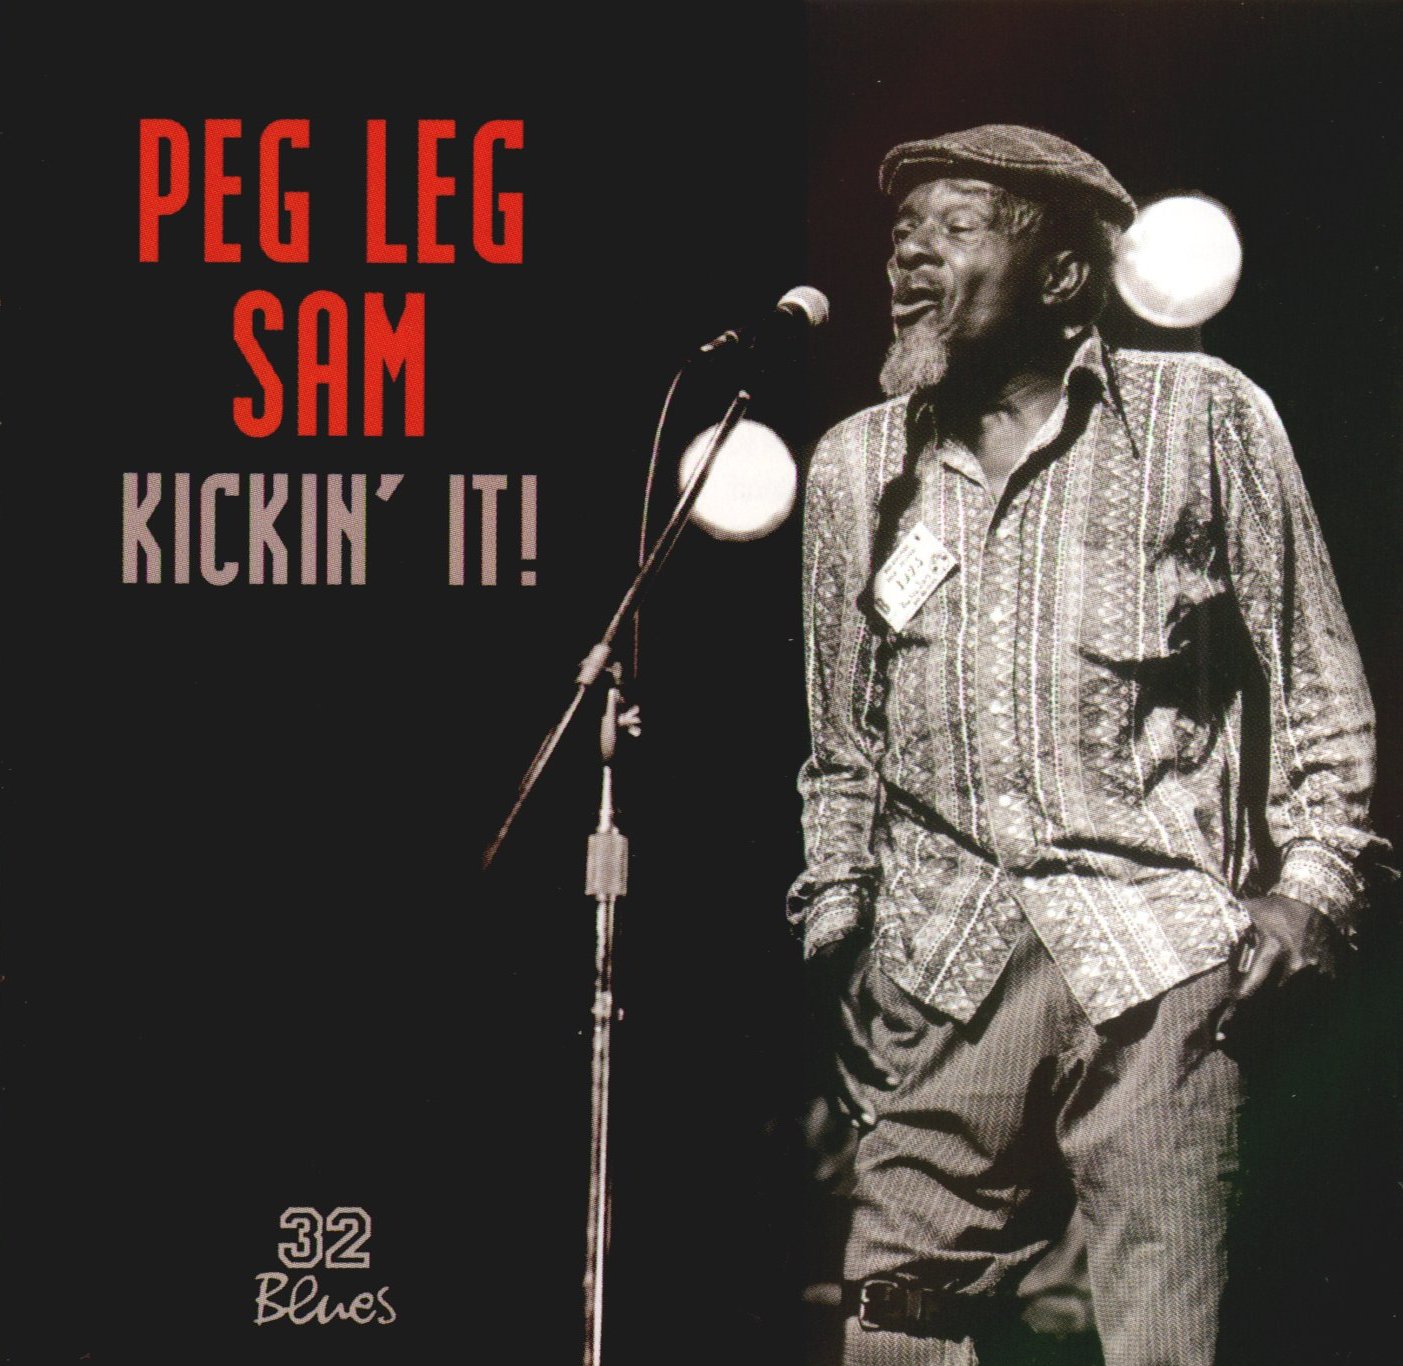 Peg leg. Peg Leg Sam. Peg Leg Sam - Medicine show man обложка альбома.